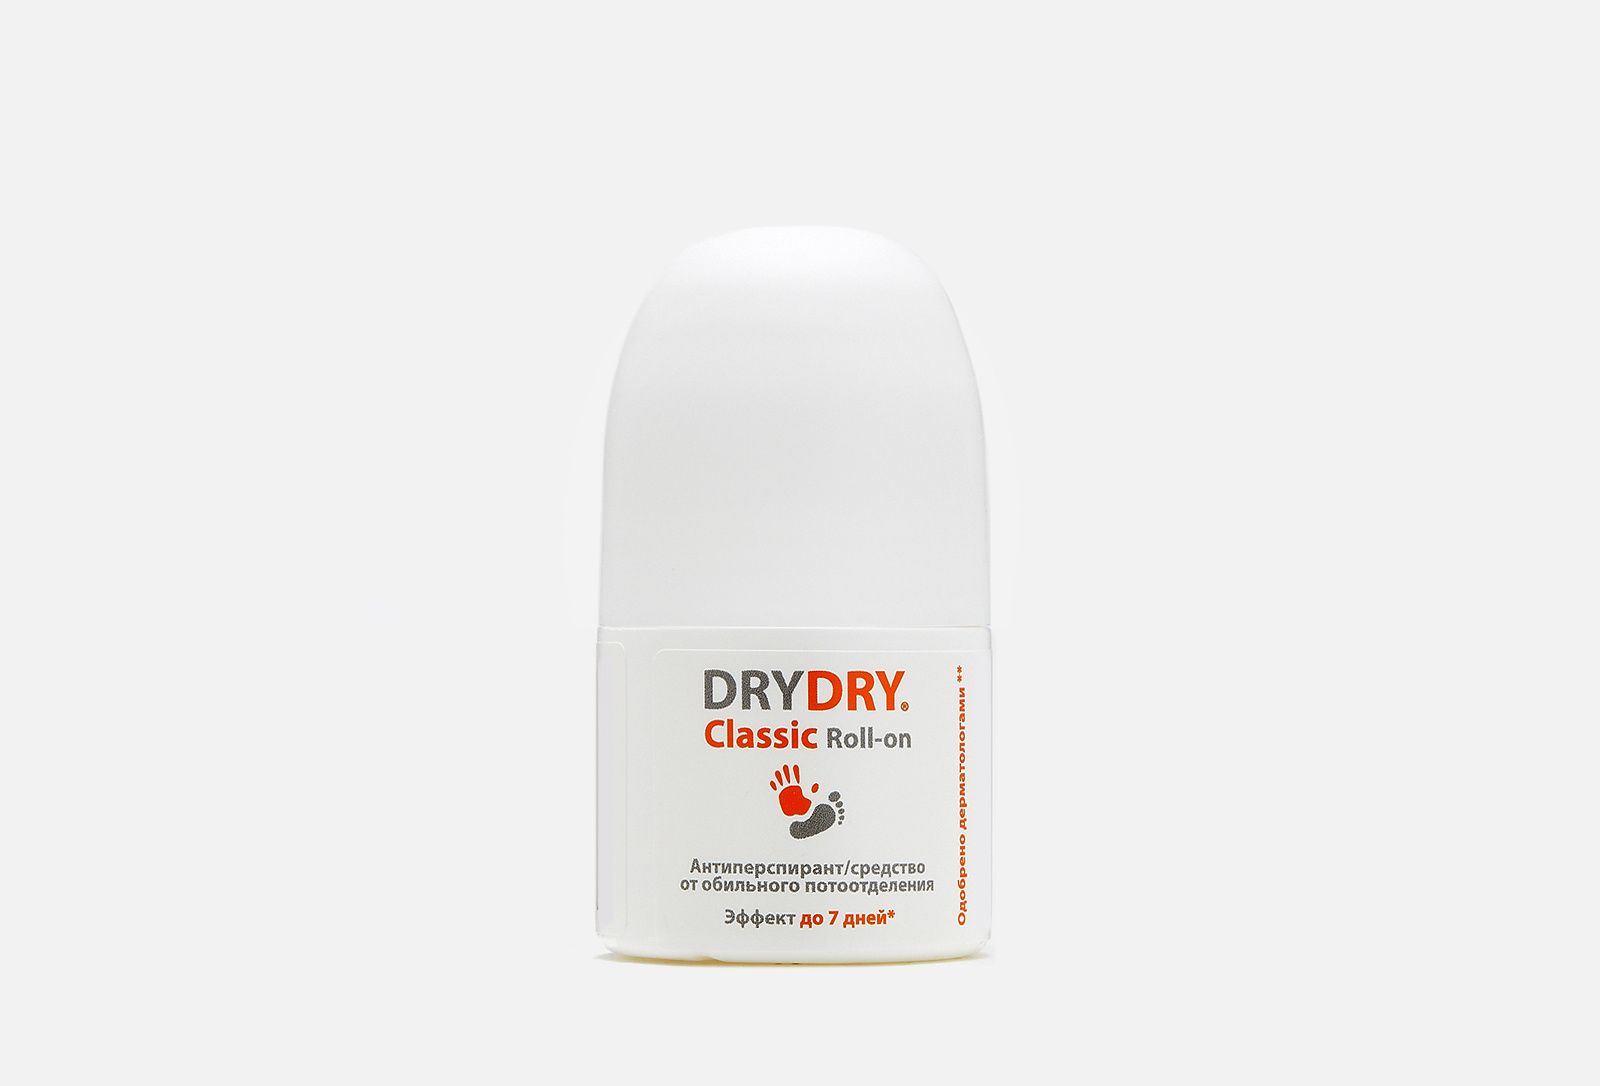 Дезодорант от сильного потоотделения. Антиперспирант DRYDRY deo, 50 мл. Dry Dry Light антиперспирант от потоотделения 50мл. Dry Dry Classic Roll-on. Дезодорант Dry Dry 35 мл.